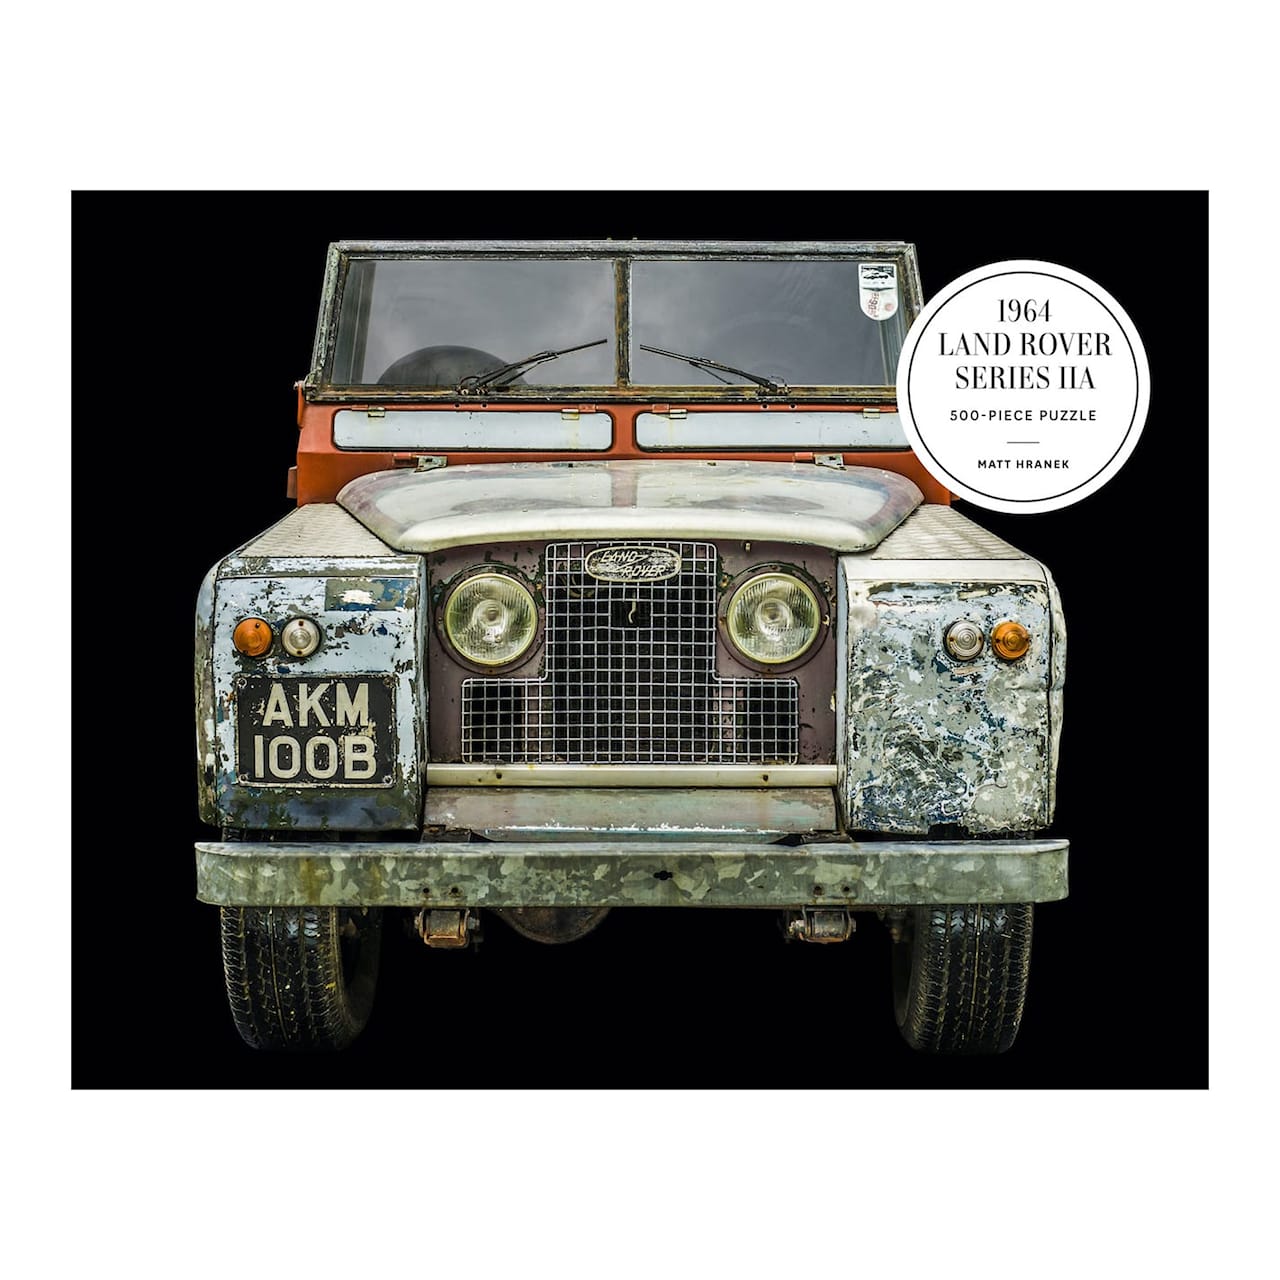 1964 Land Rover 500 Piece Puzzle